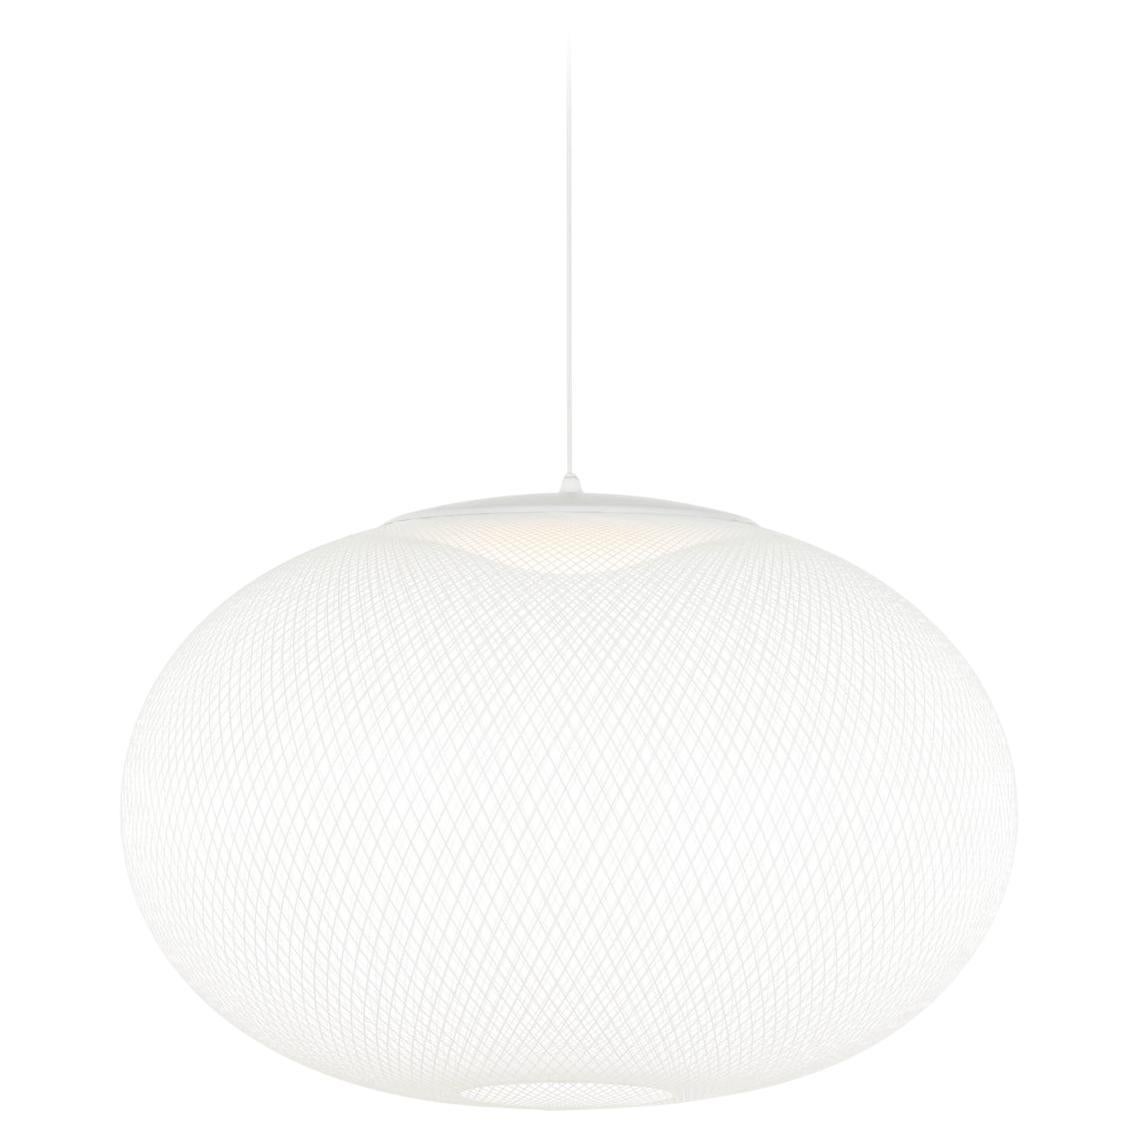 Moooi NR2 Large White LED Suspension Lamp in Aluminum and Fiberglass